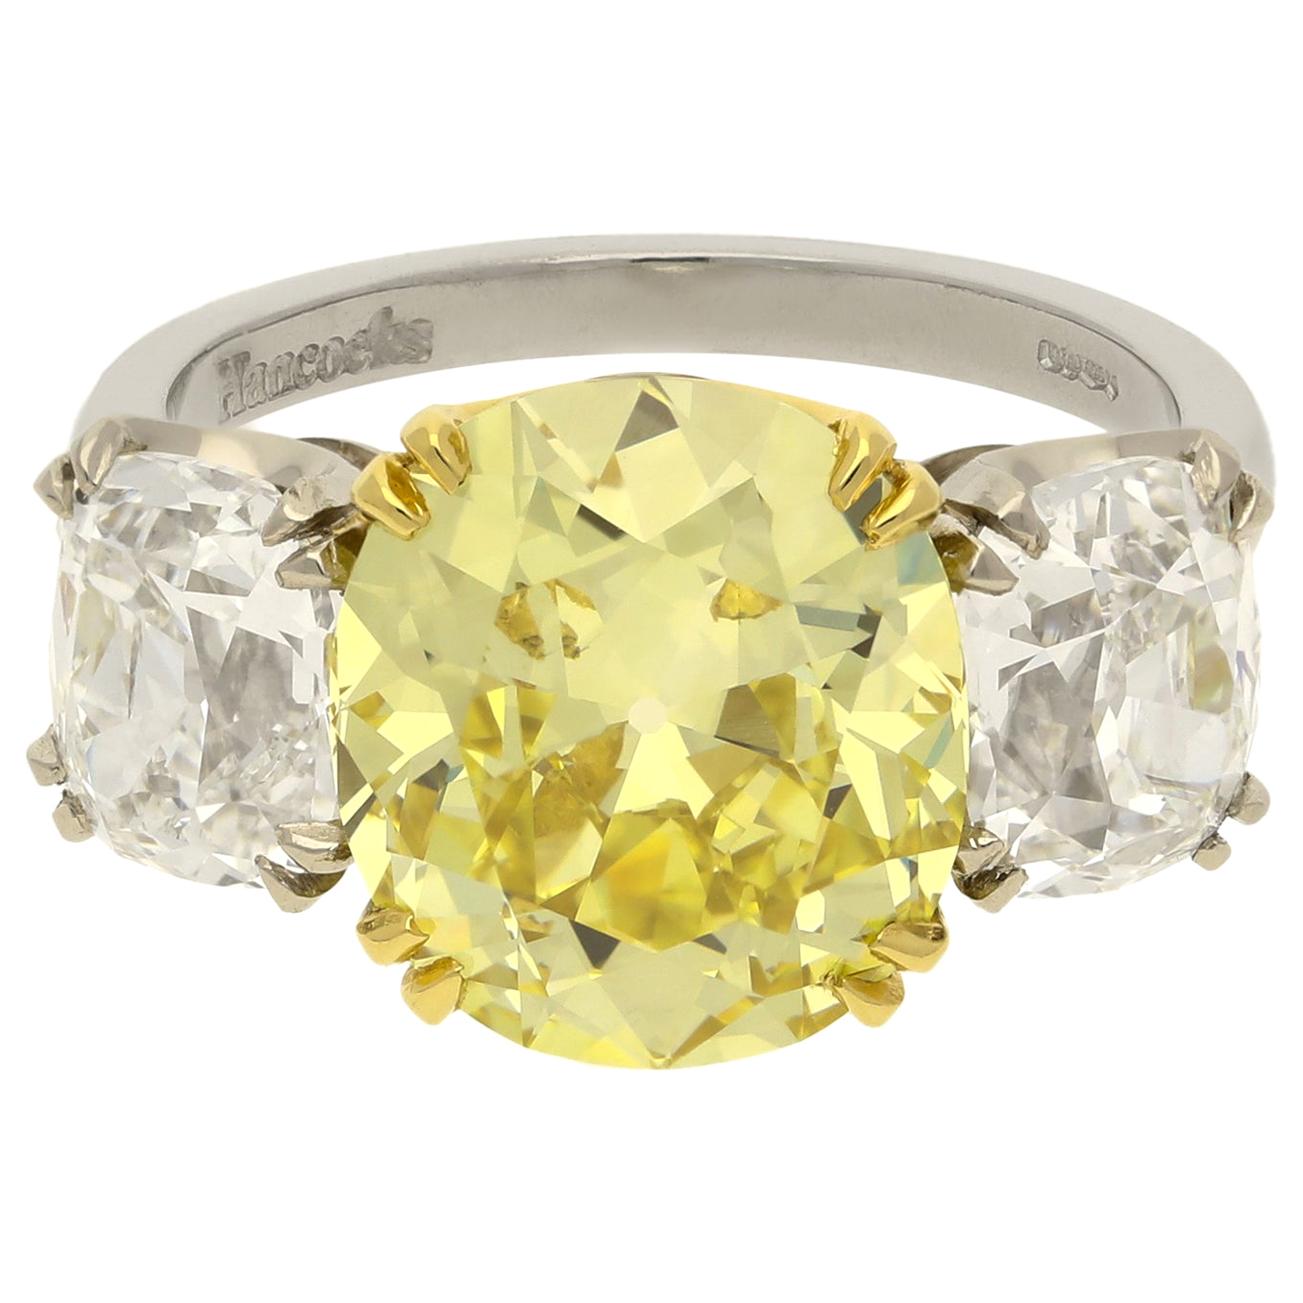 5.13 Carat Fancy Intense Yellow Old Cushion Diamond 3 Stone Ring by Hancocks